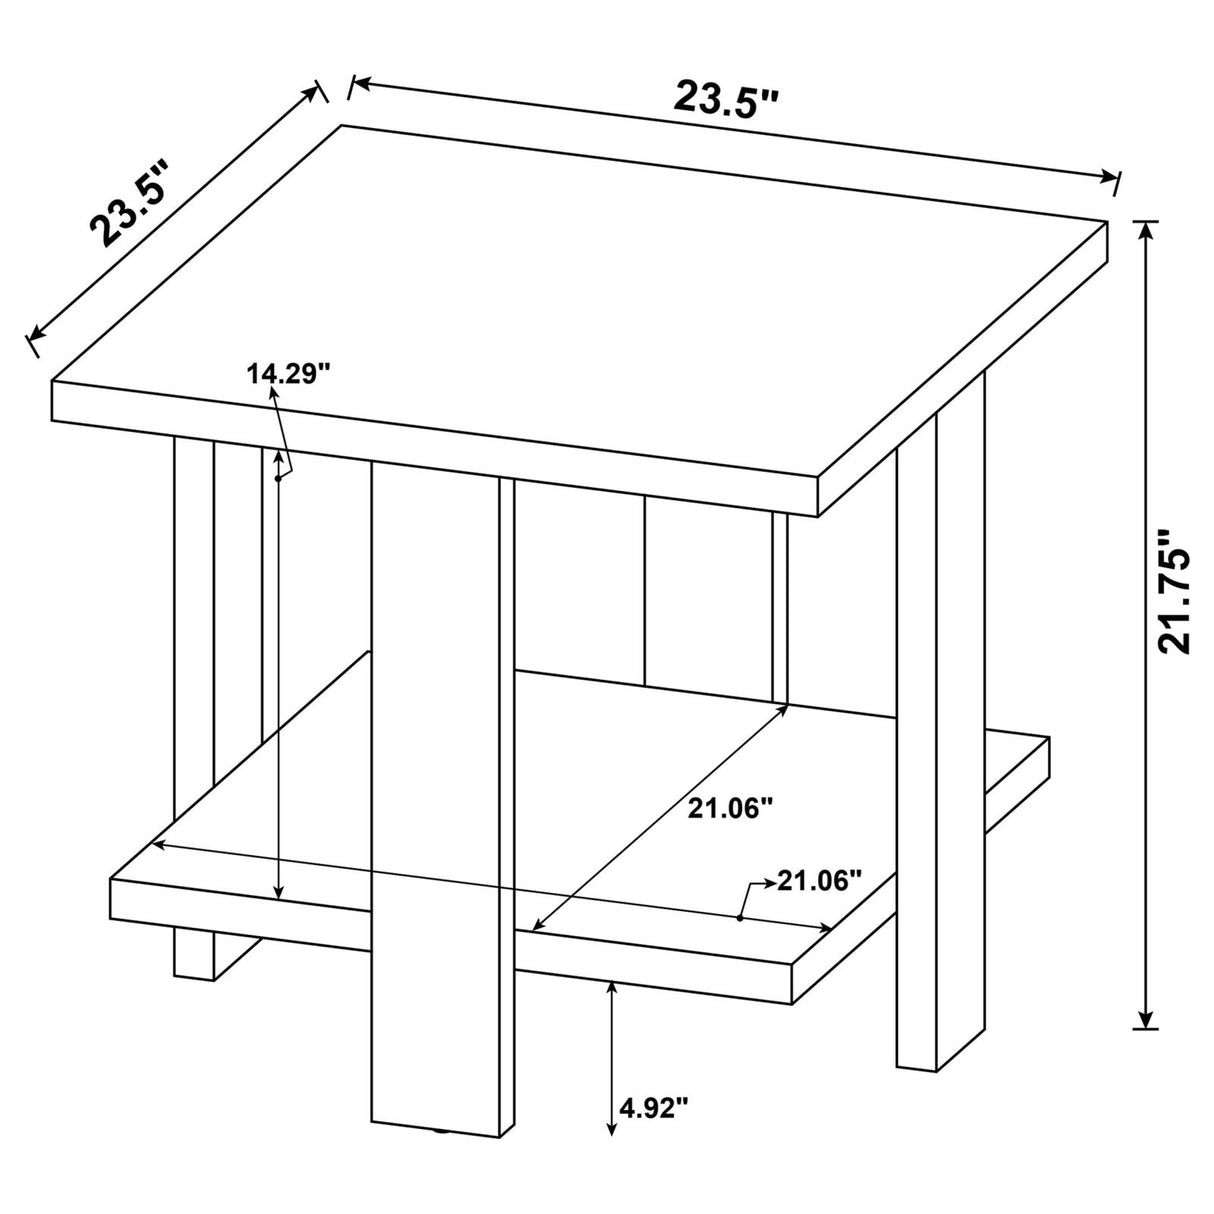 Dawn Square Engineered Wood End Table With Shelf Mango - 707717 - Luna Furniture